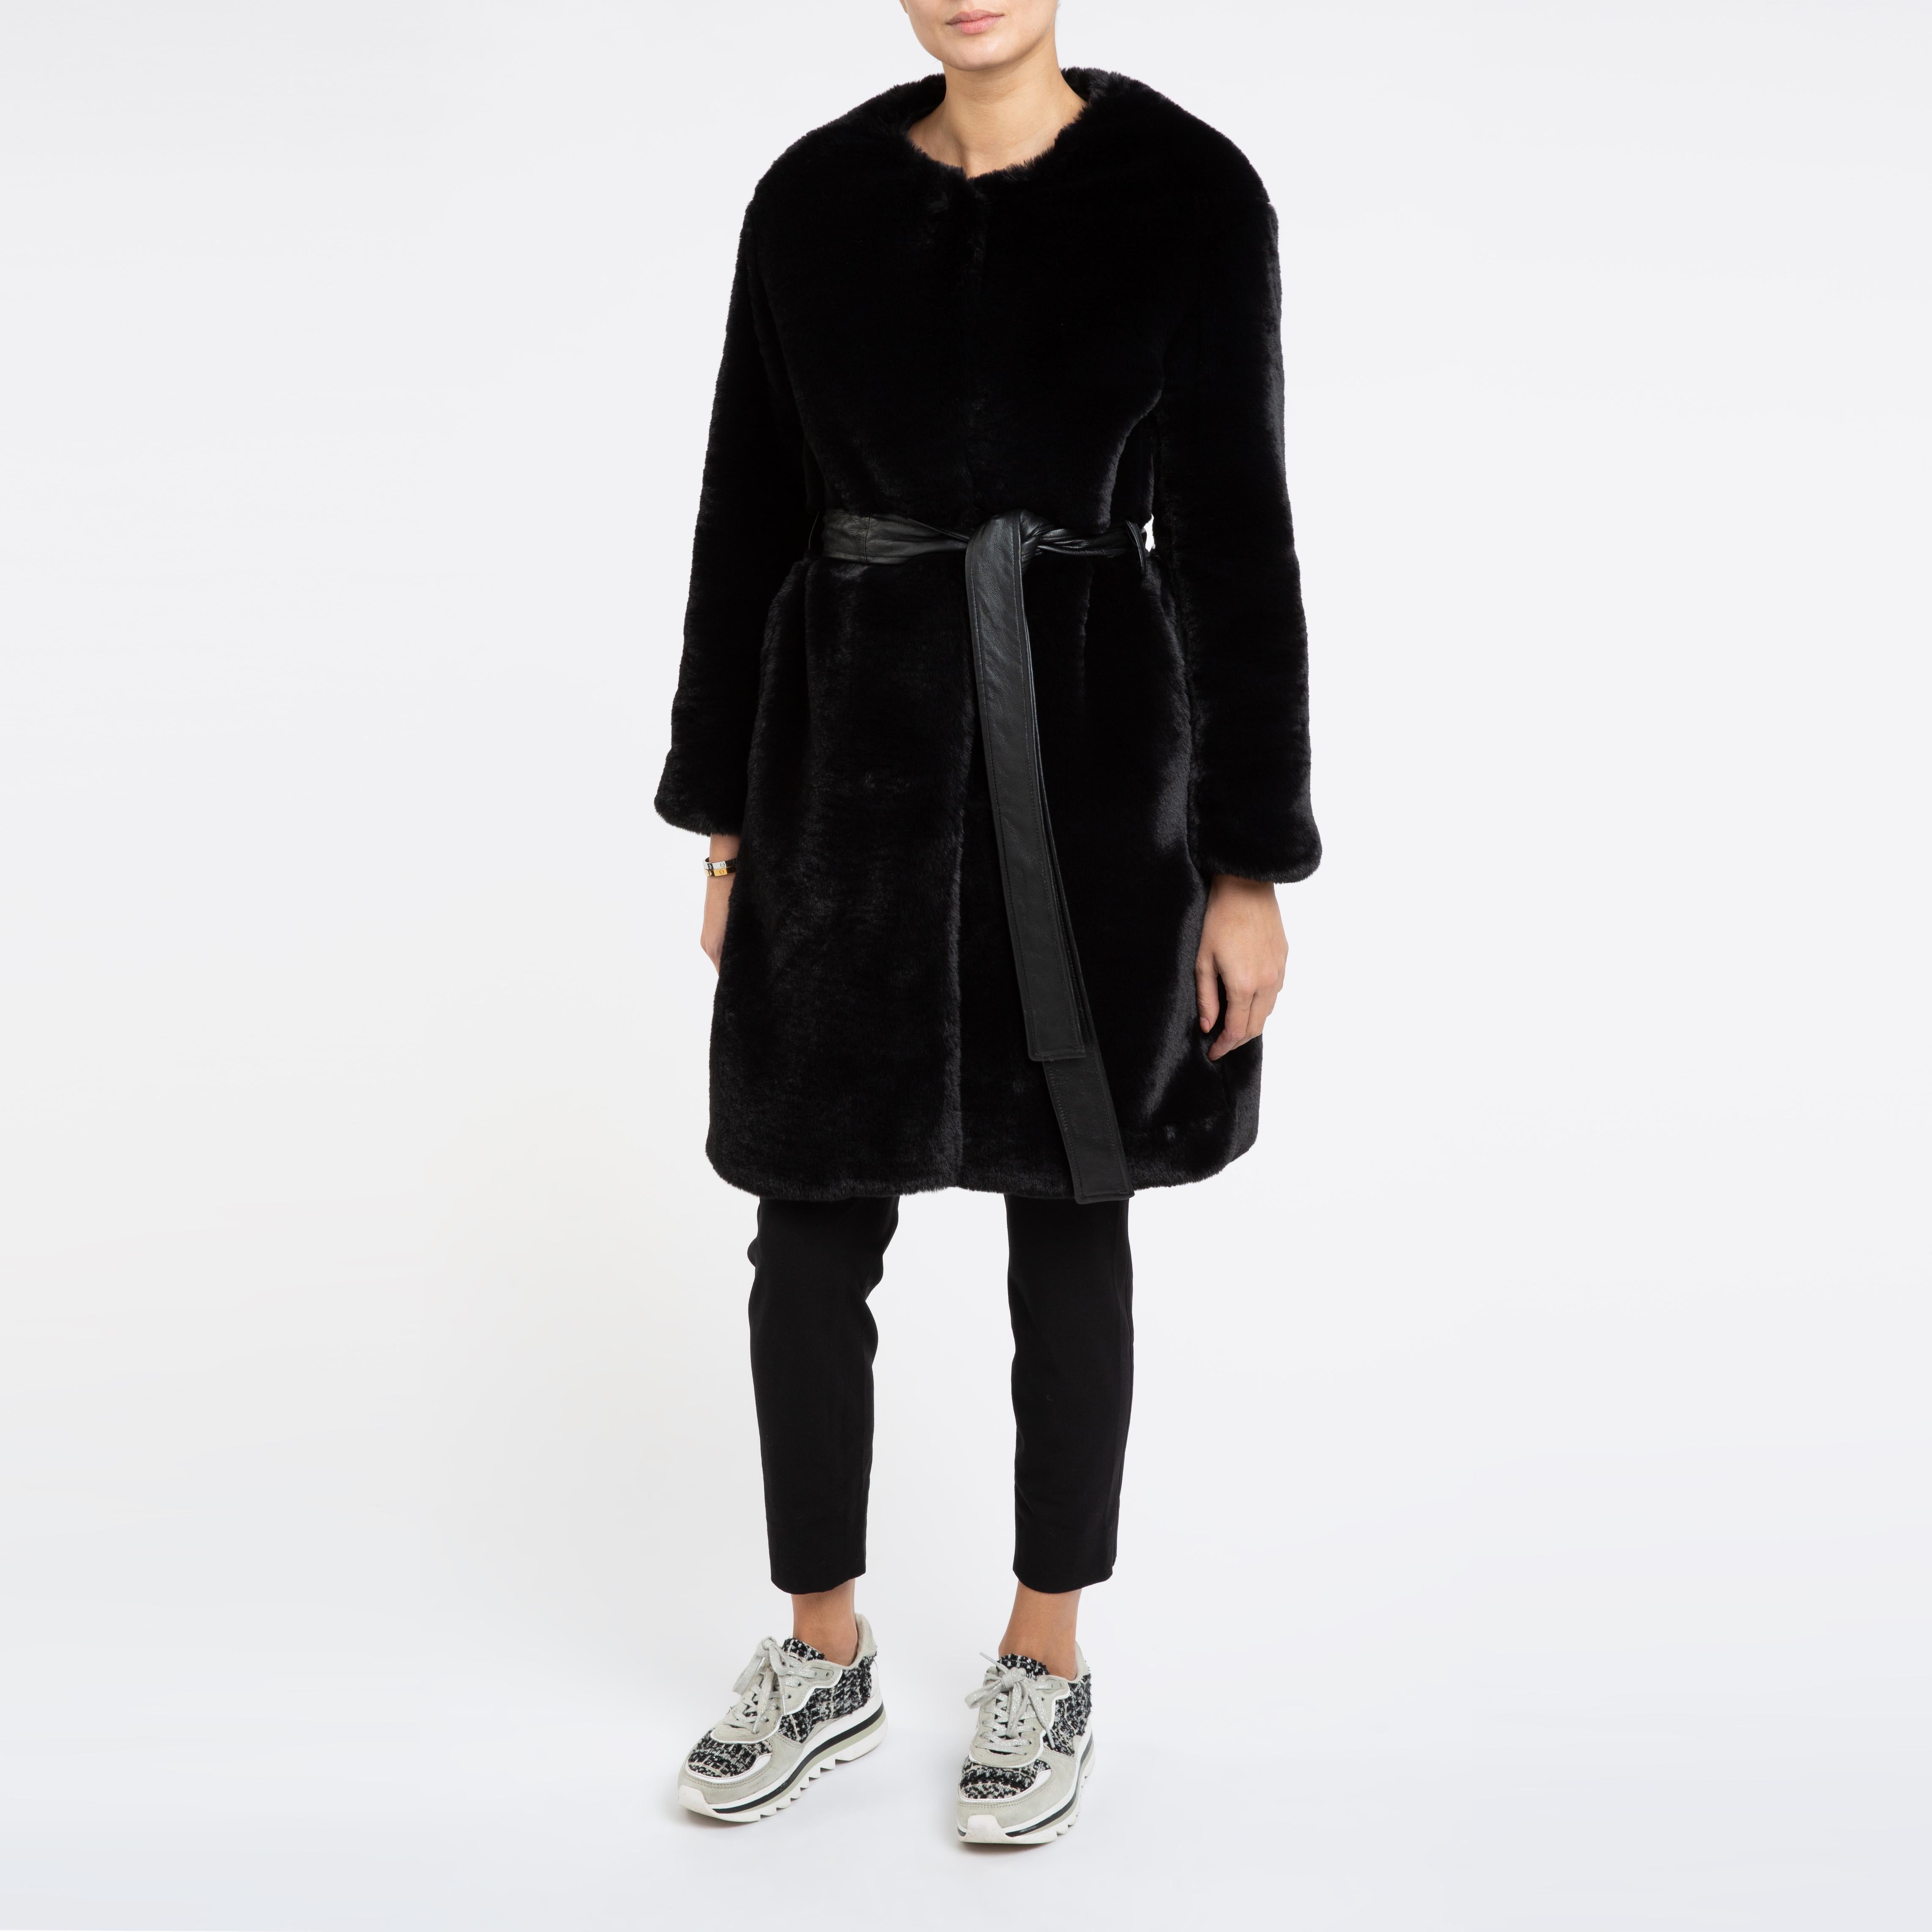 Verheyen London Serena  Collarless Faux Fur Coat in Black - Size uk 12  7